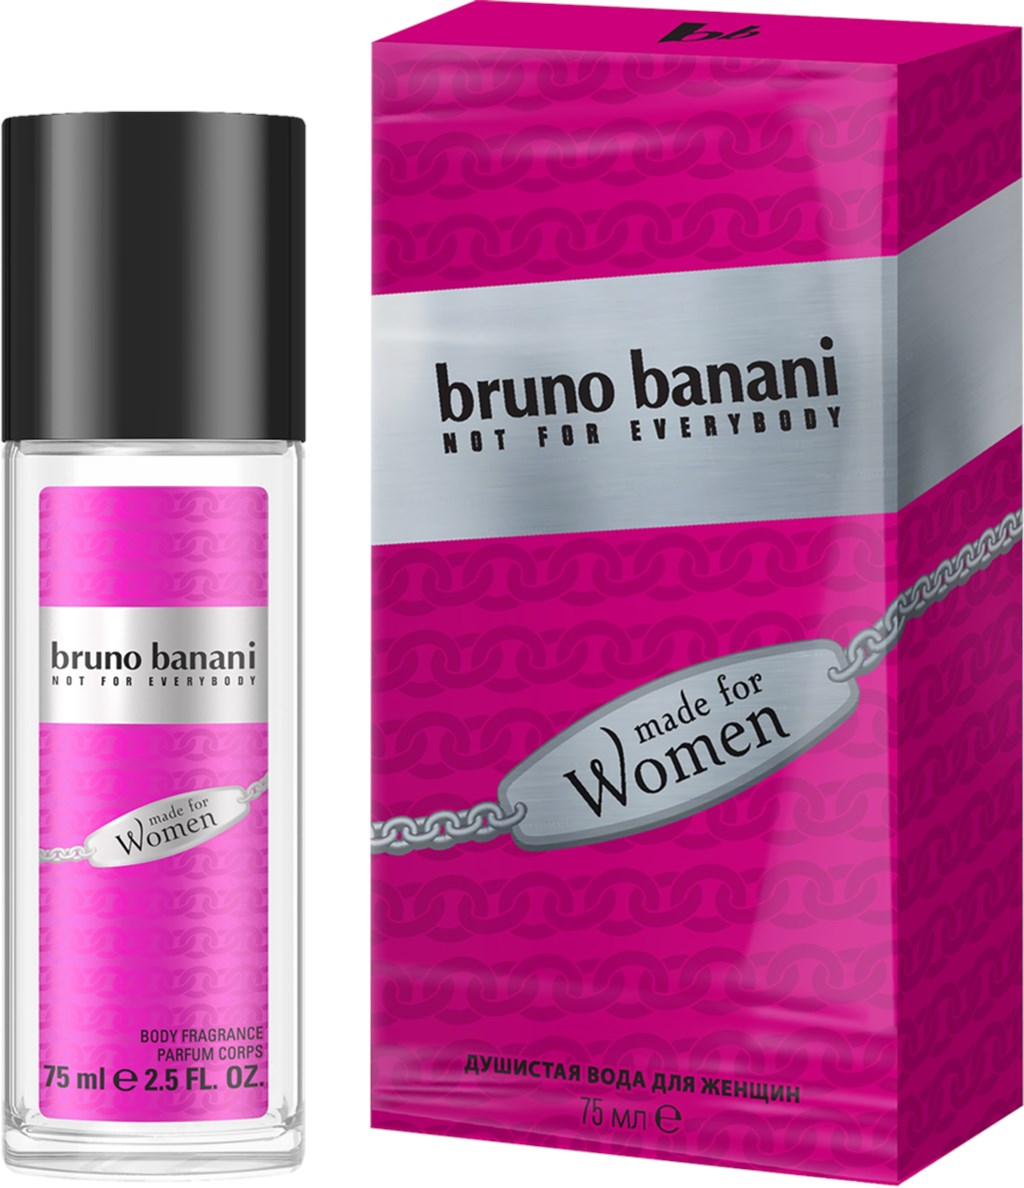 Bruno Banani Made For Woman Ж Товар Душистая вода 75 мл